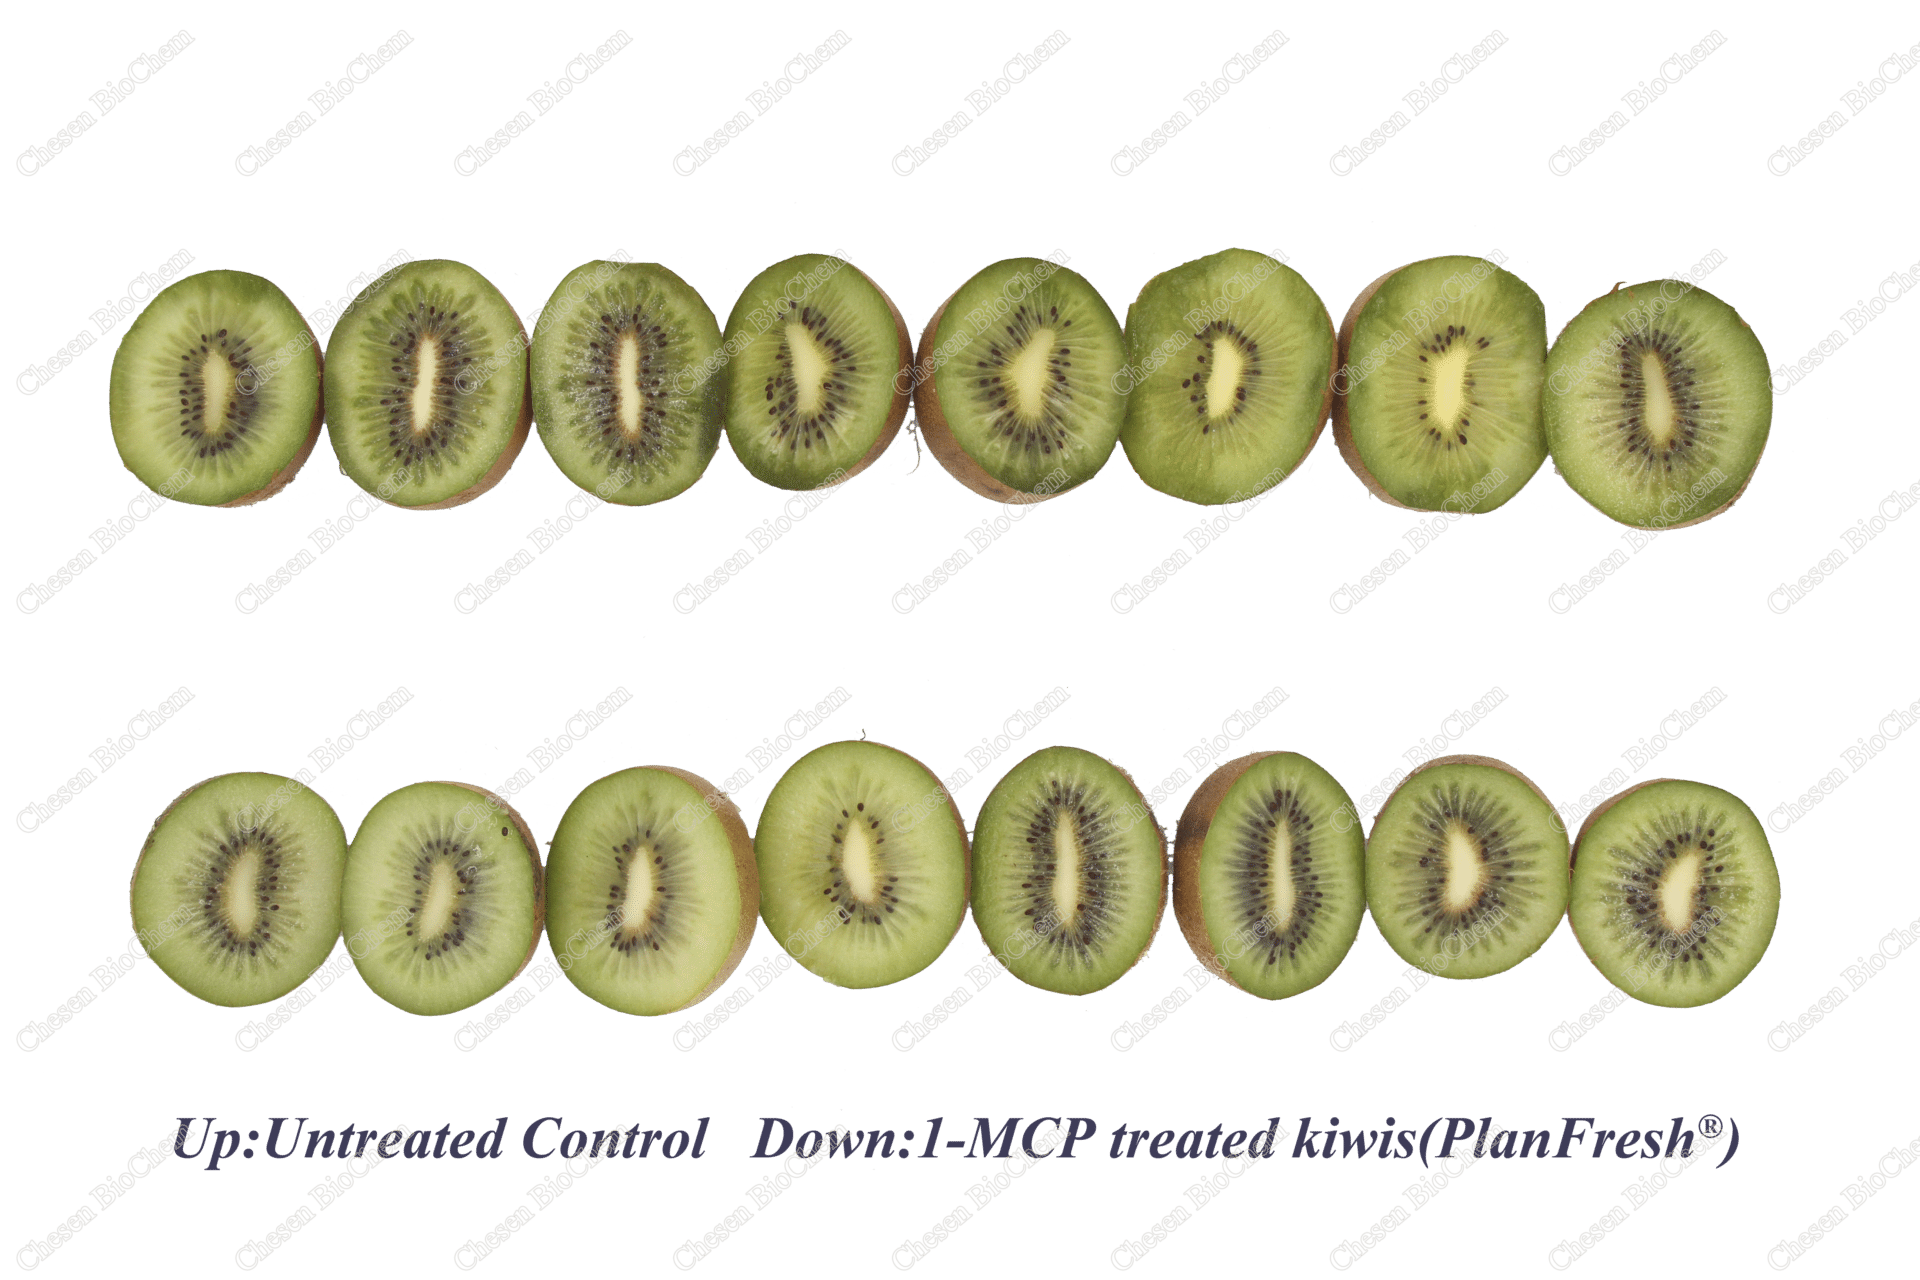 Application of Extends Kiwifruit of 1-MCP Postharvest Life Shelf